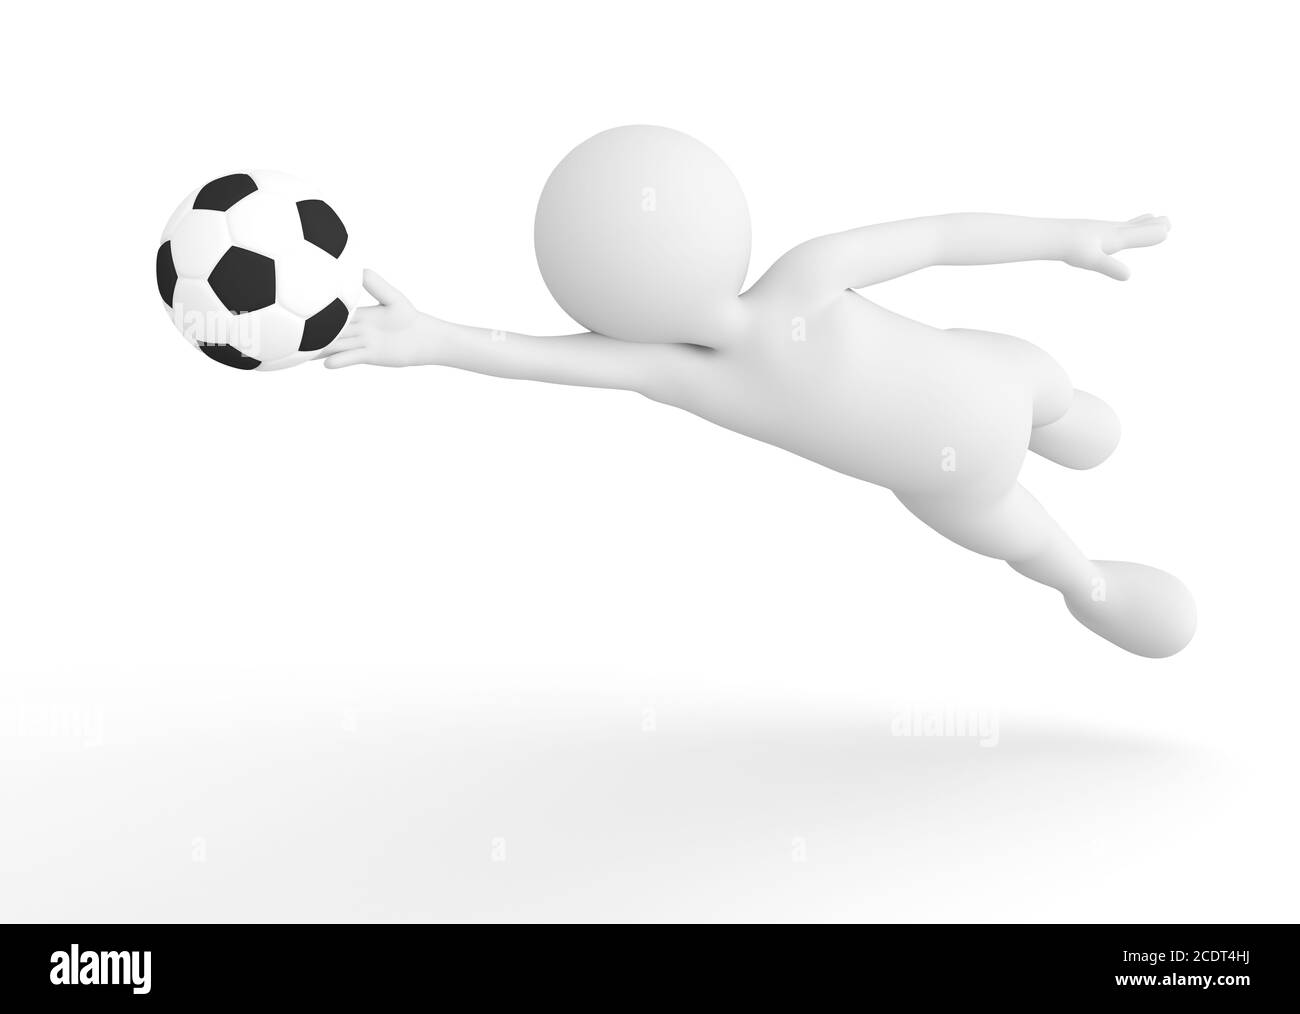 Toon man soccer goalkeeper saving the ball from goal. Football concept. Stock Photo